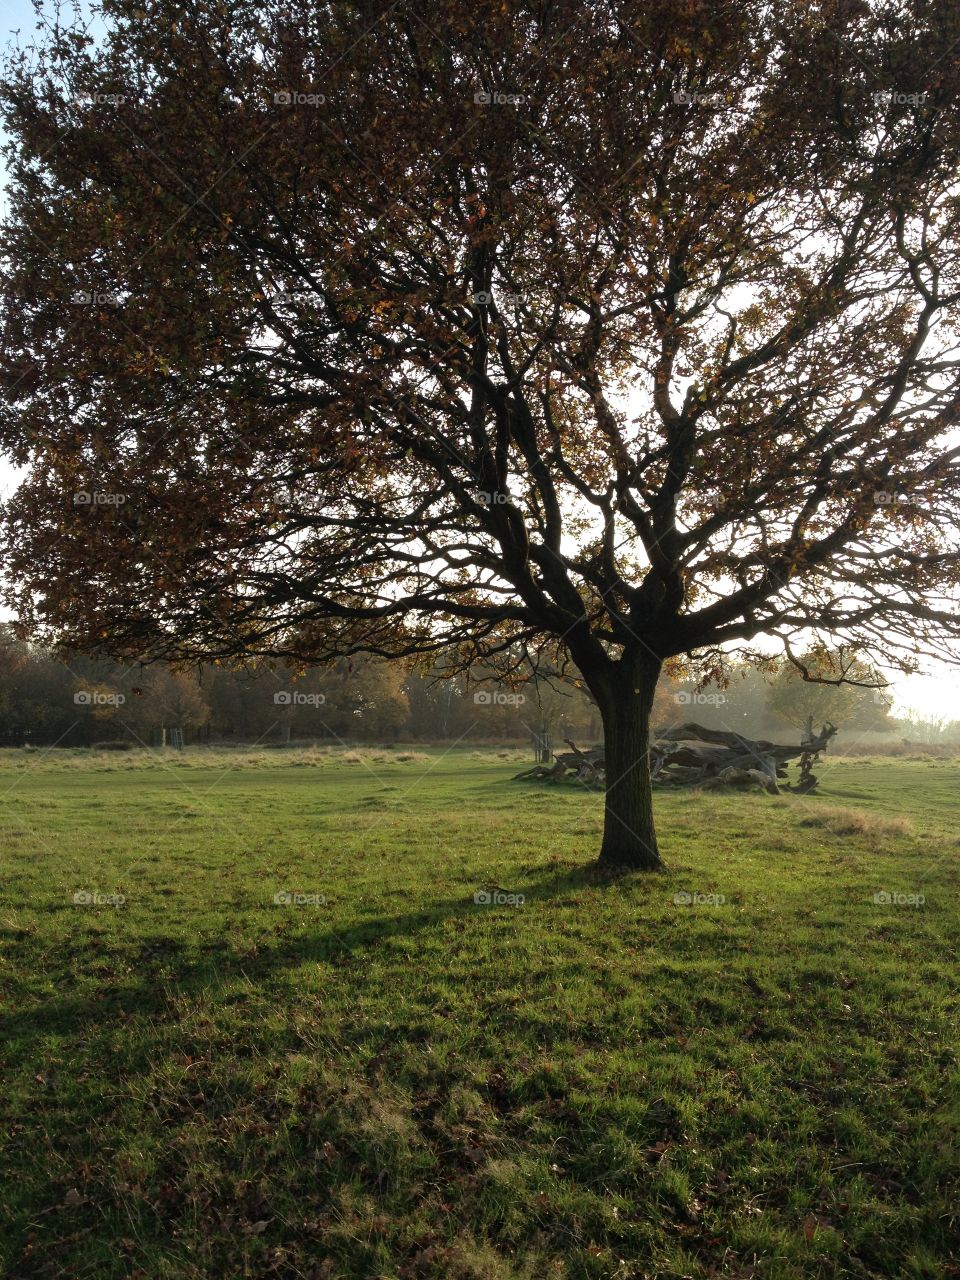 Setting sun - Richmond Park